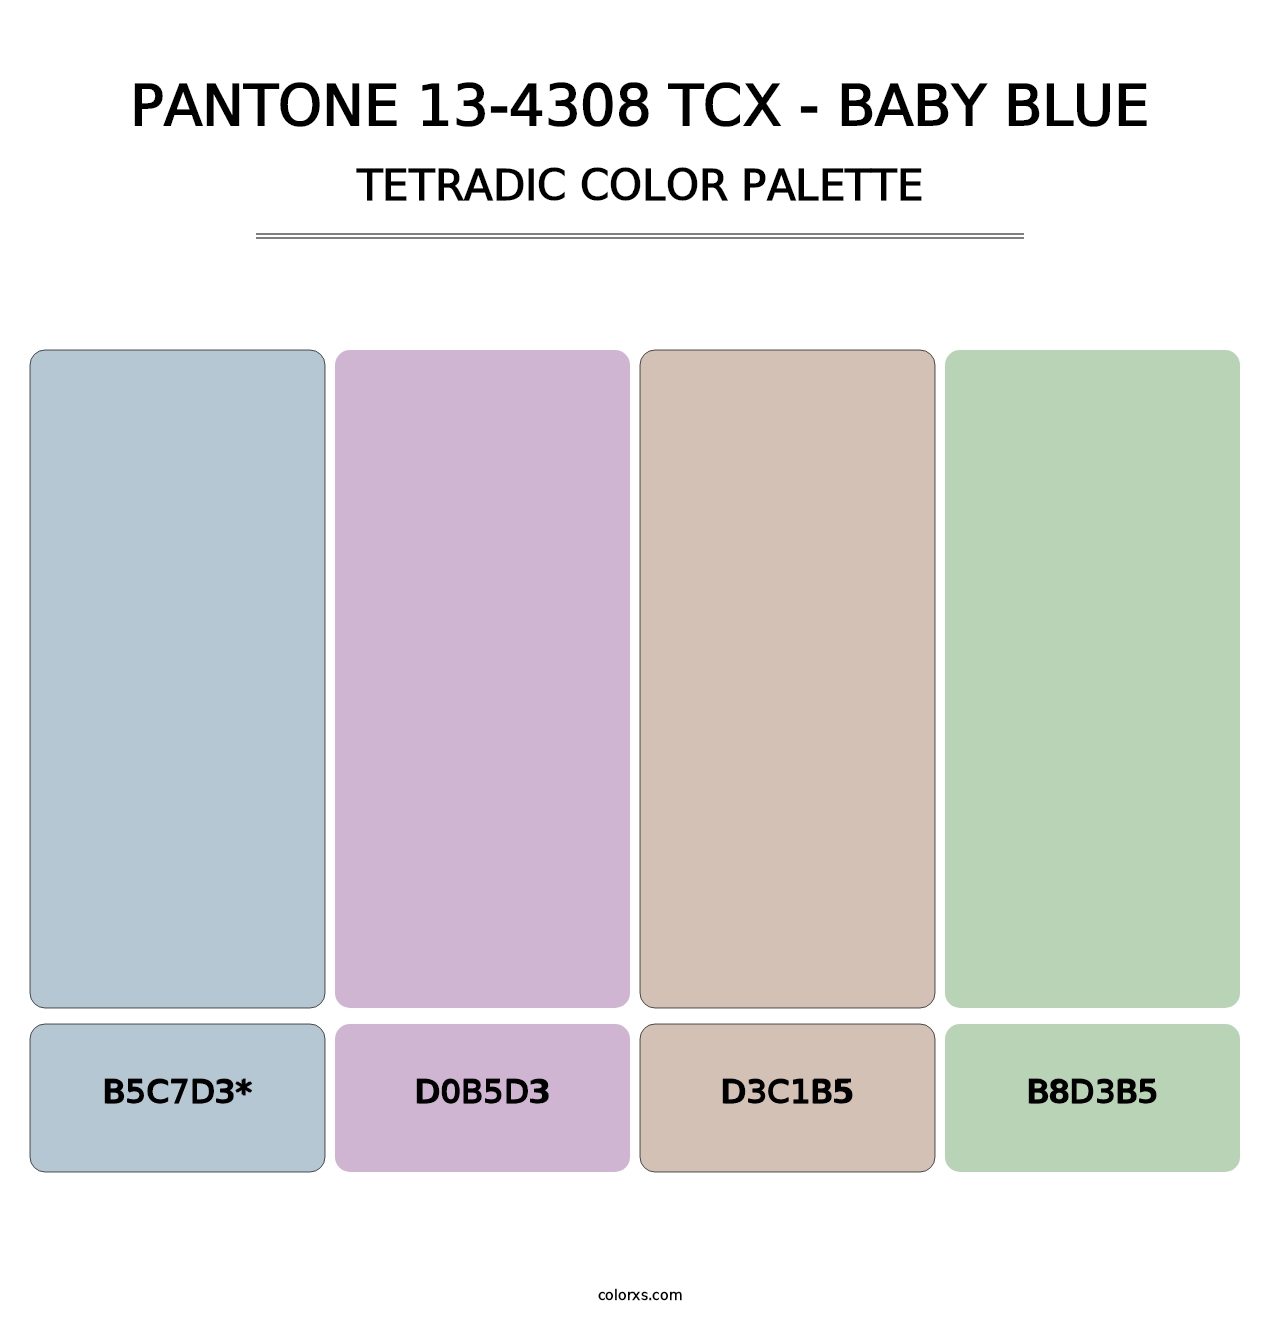 PANTONE 13-4308 TCX - Baby Blue - Tetradic Color Palette